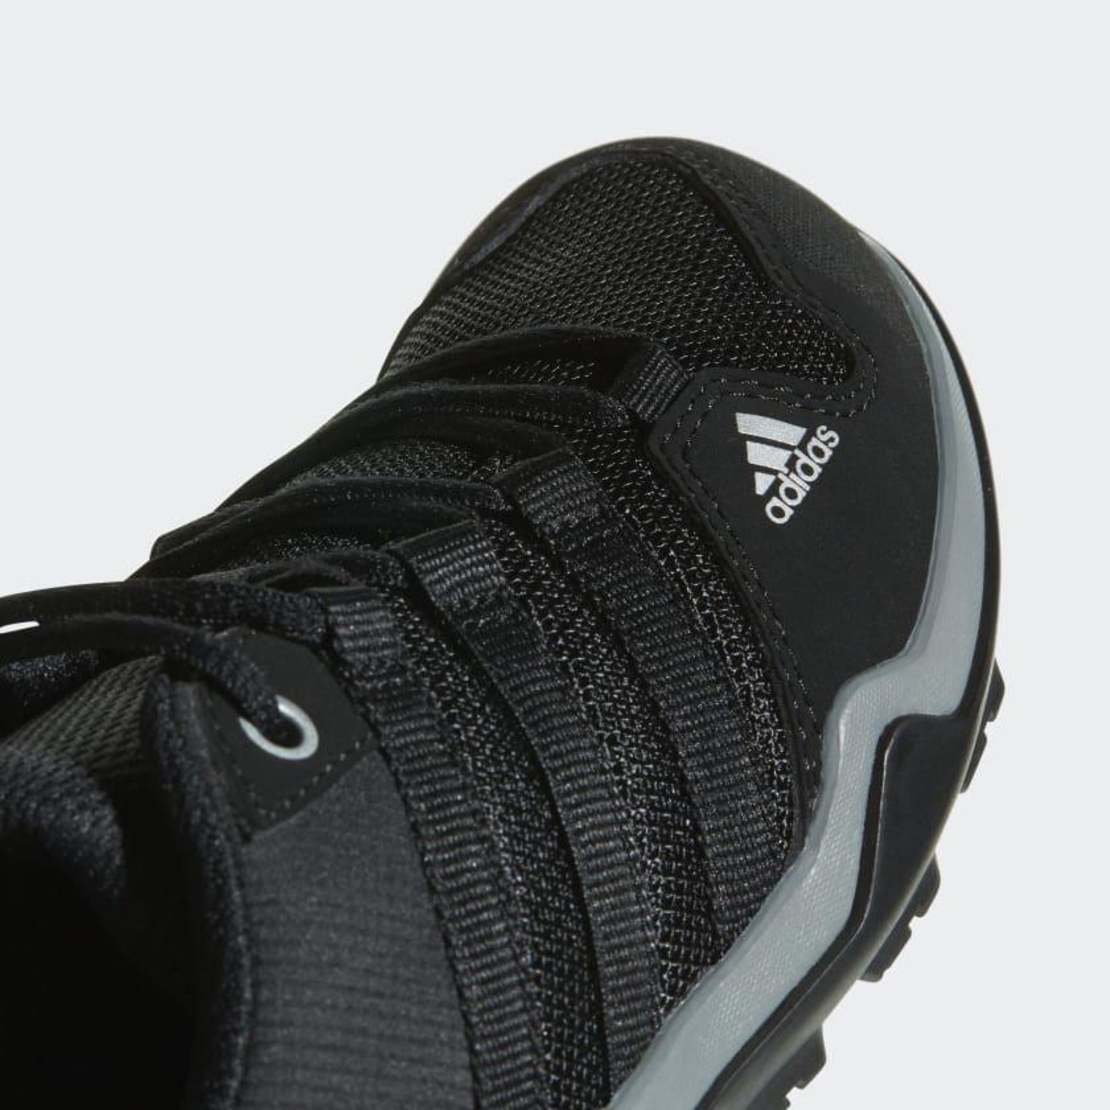 נעלי אדידס לנוער ונשים | Adidas Terrex Ax2r